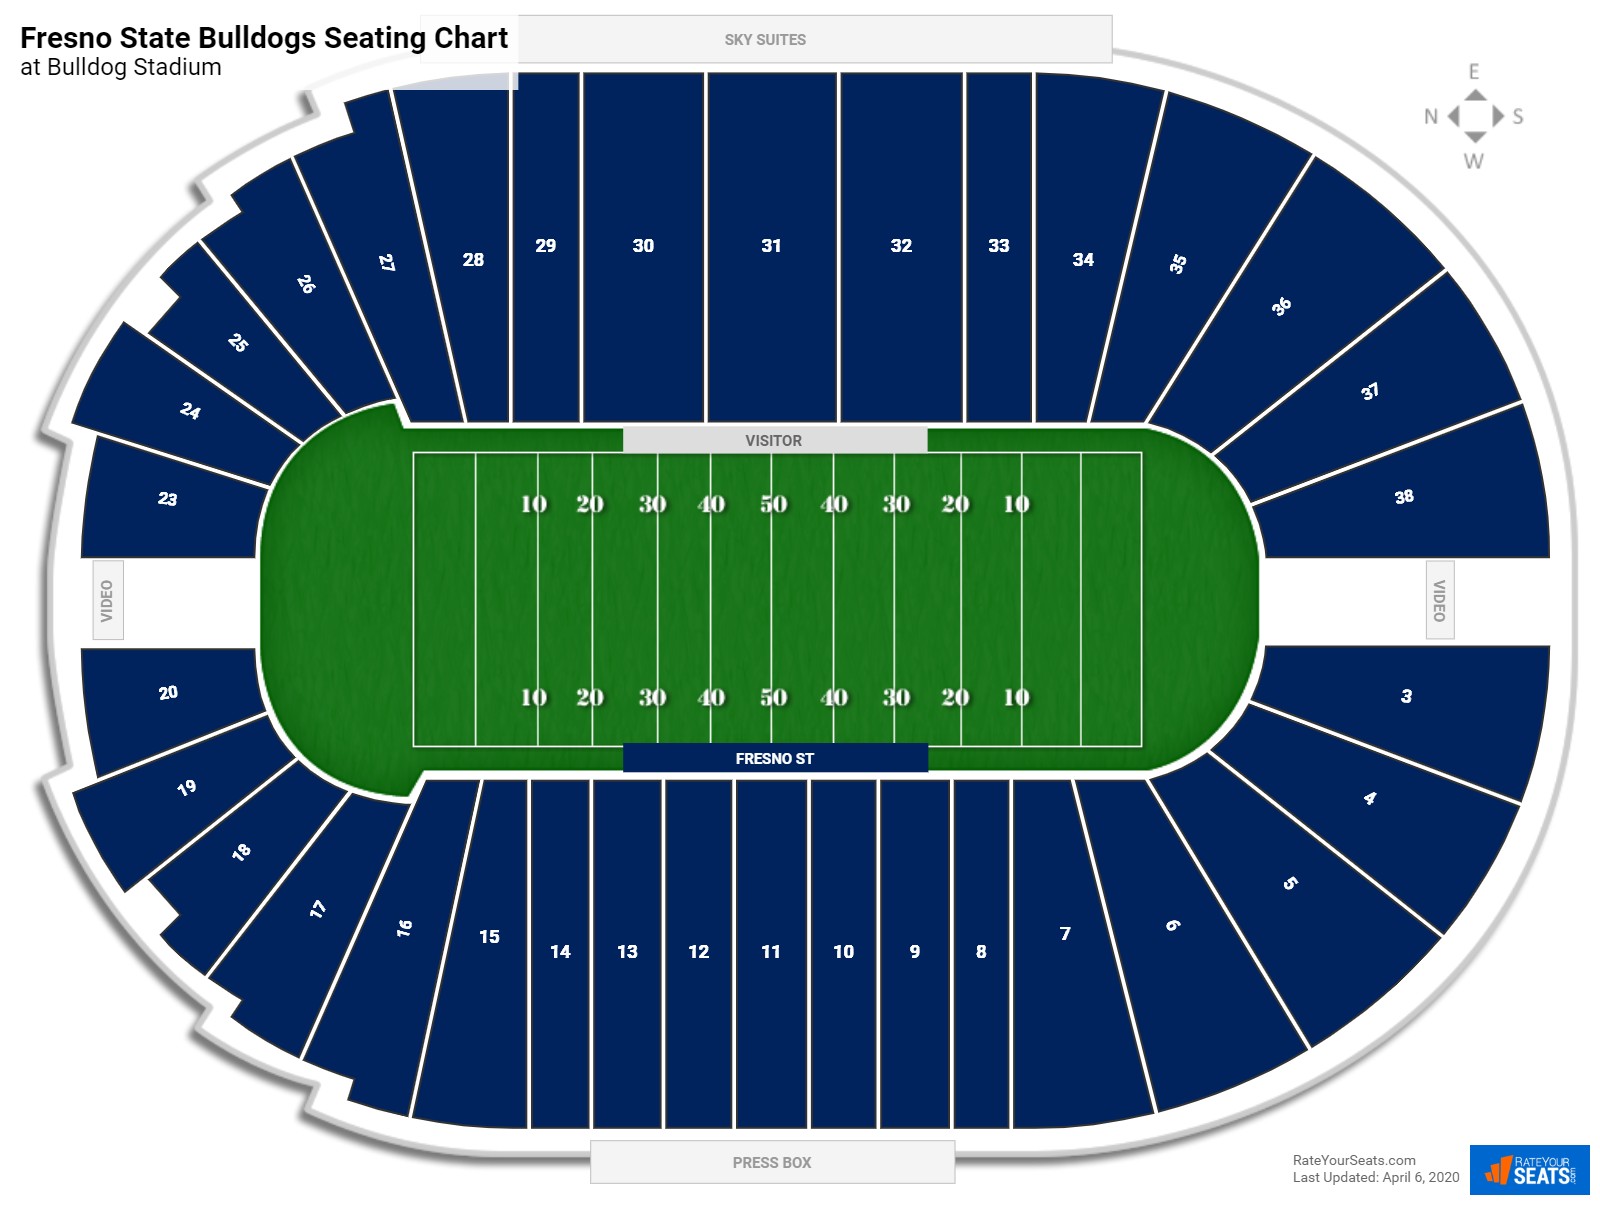 Bulldog Stadium Seating Charts - RateYourSeats.com